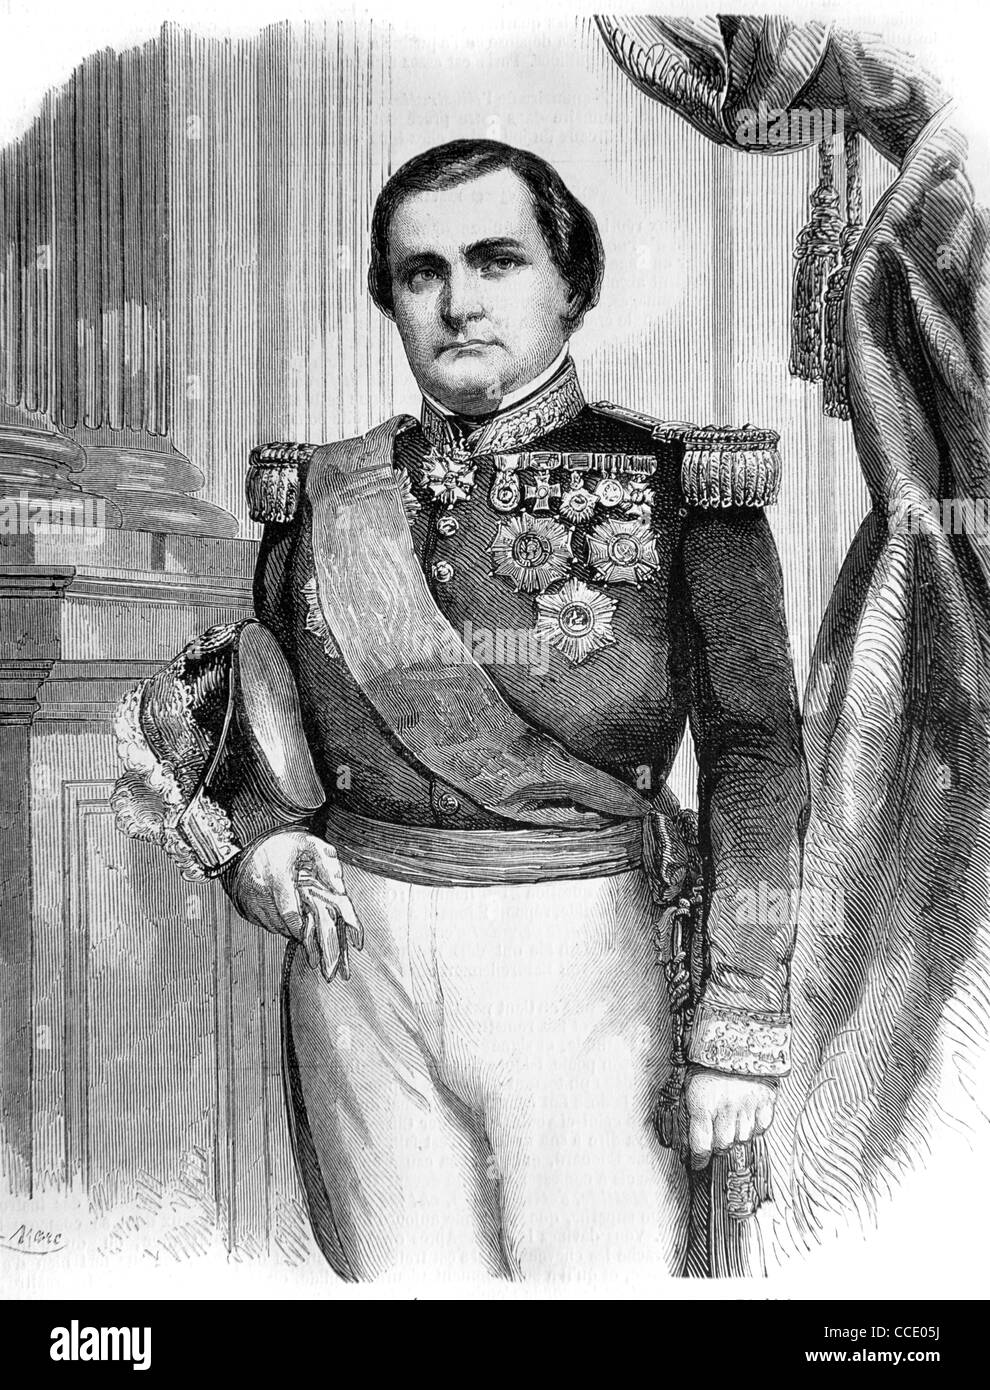 Portrait of Major General Napoleon Joseph Charles Paul Bonaparte (1822-1891) Prince Napoleon, Jérôme Napoleon or Plon-Plon wearing French Military Uniform. Vintage Illustration or Engraving Stock Photo